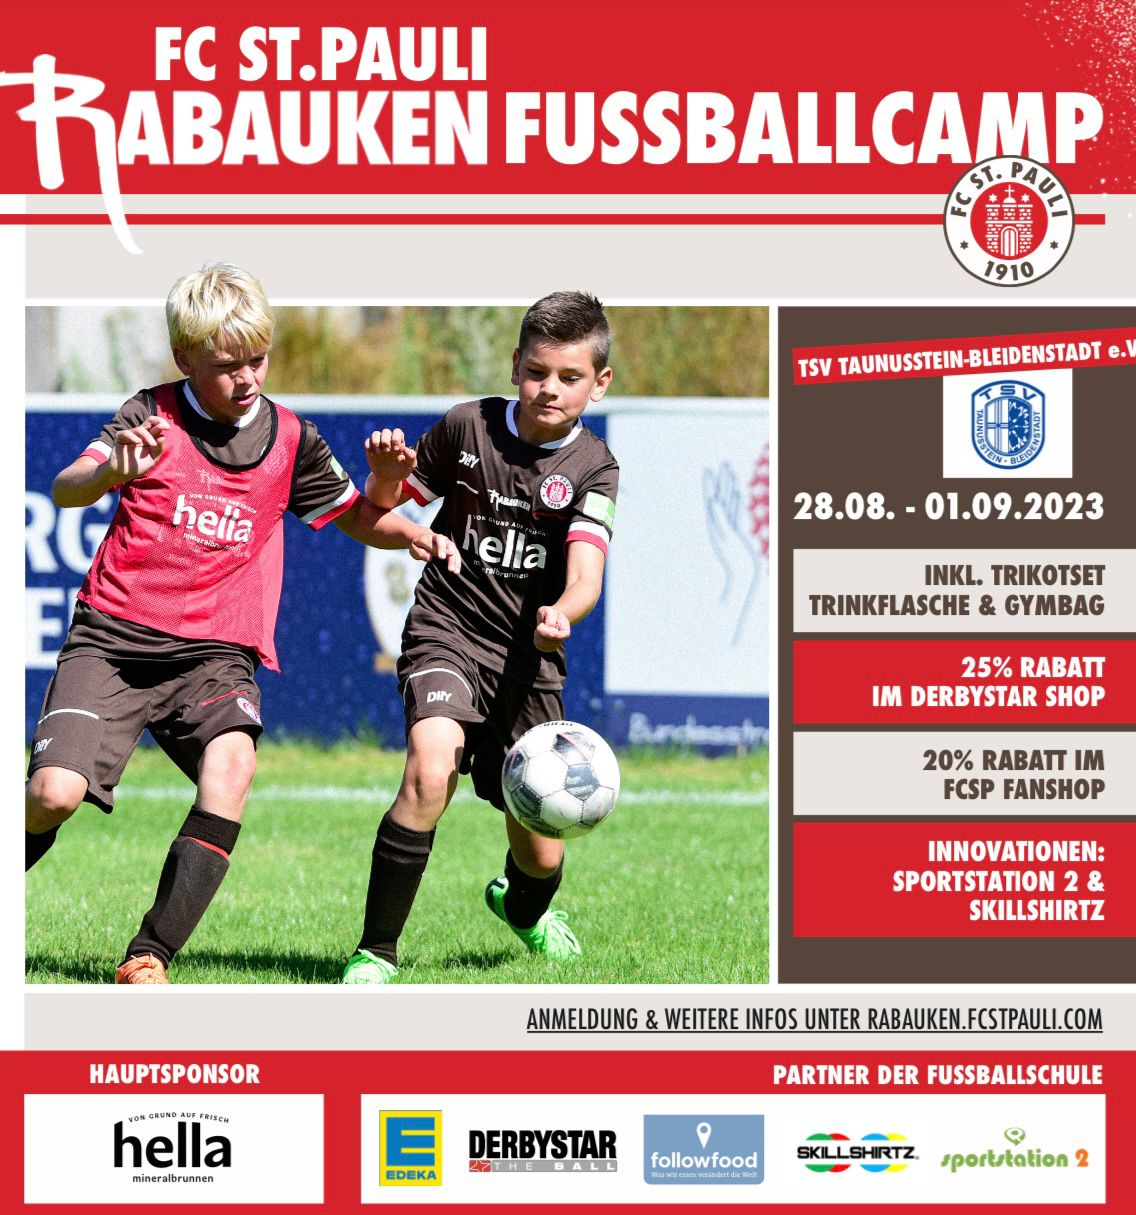 Rabauken Fussballcamp des FC St. Pauli am Röderweg